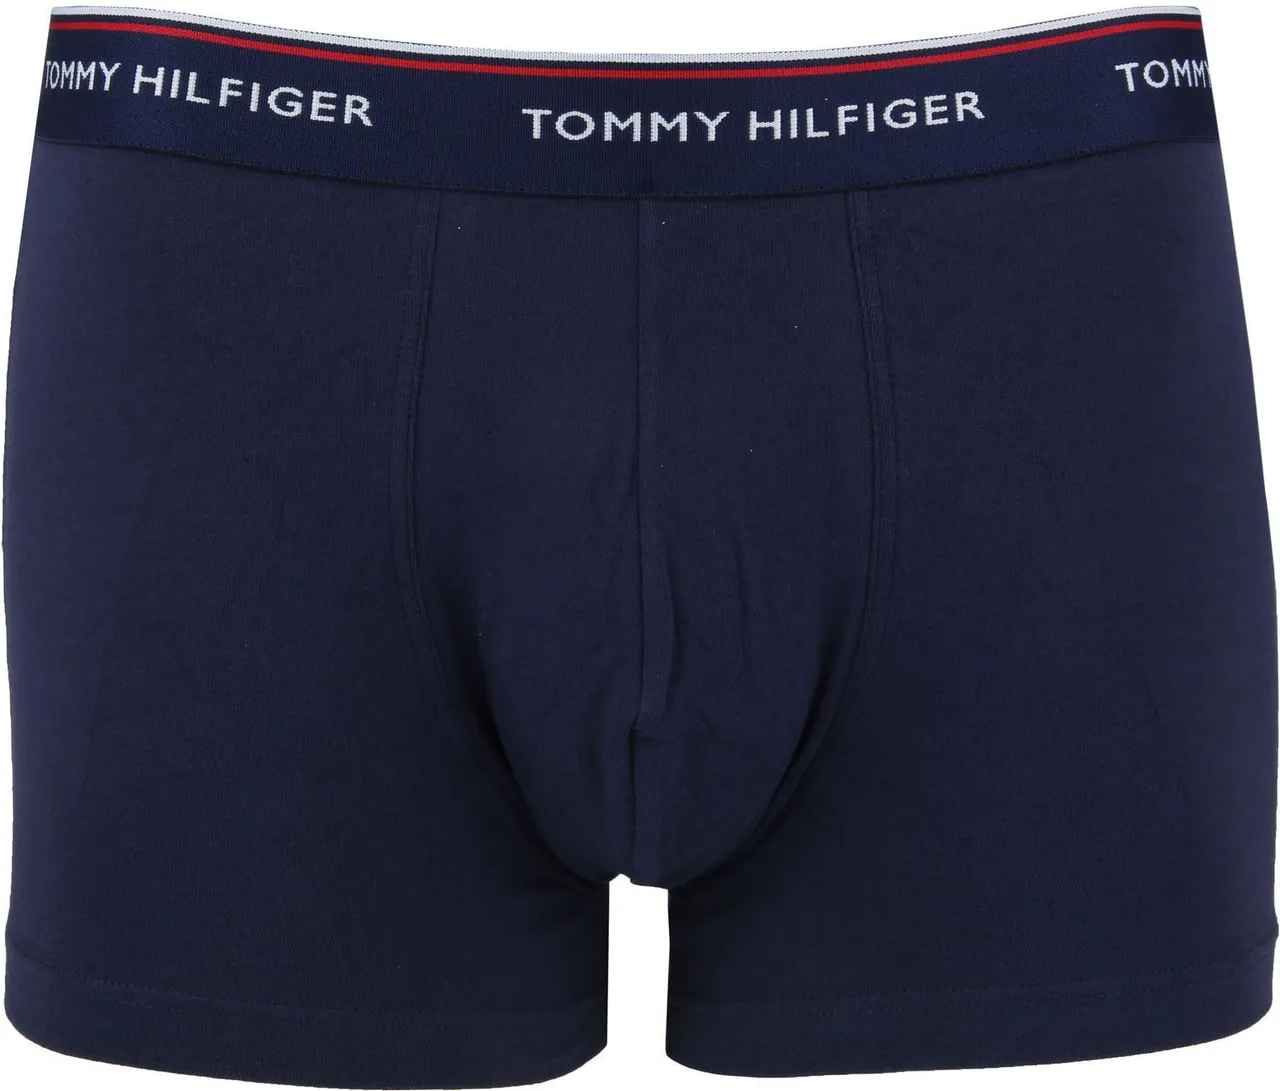 Tommy Hilfiger Boxershorts 3-Pack Trunk Multi Dark Blue White Red Blue